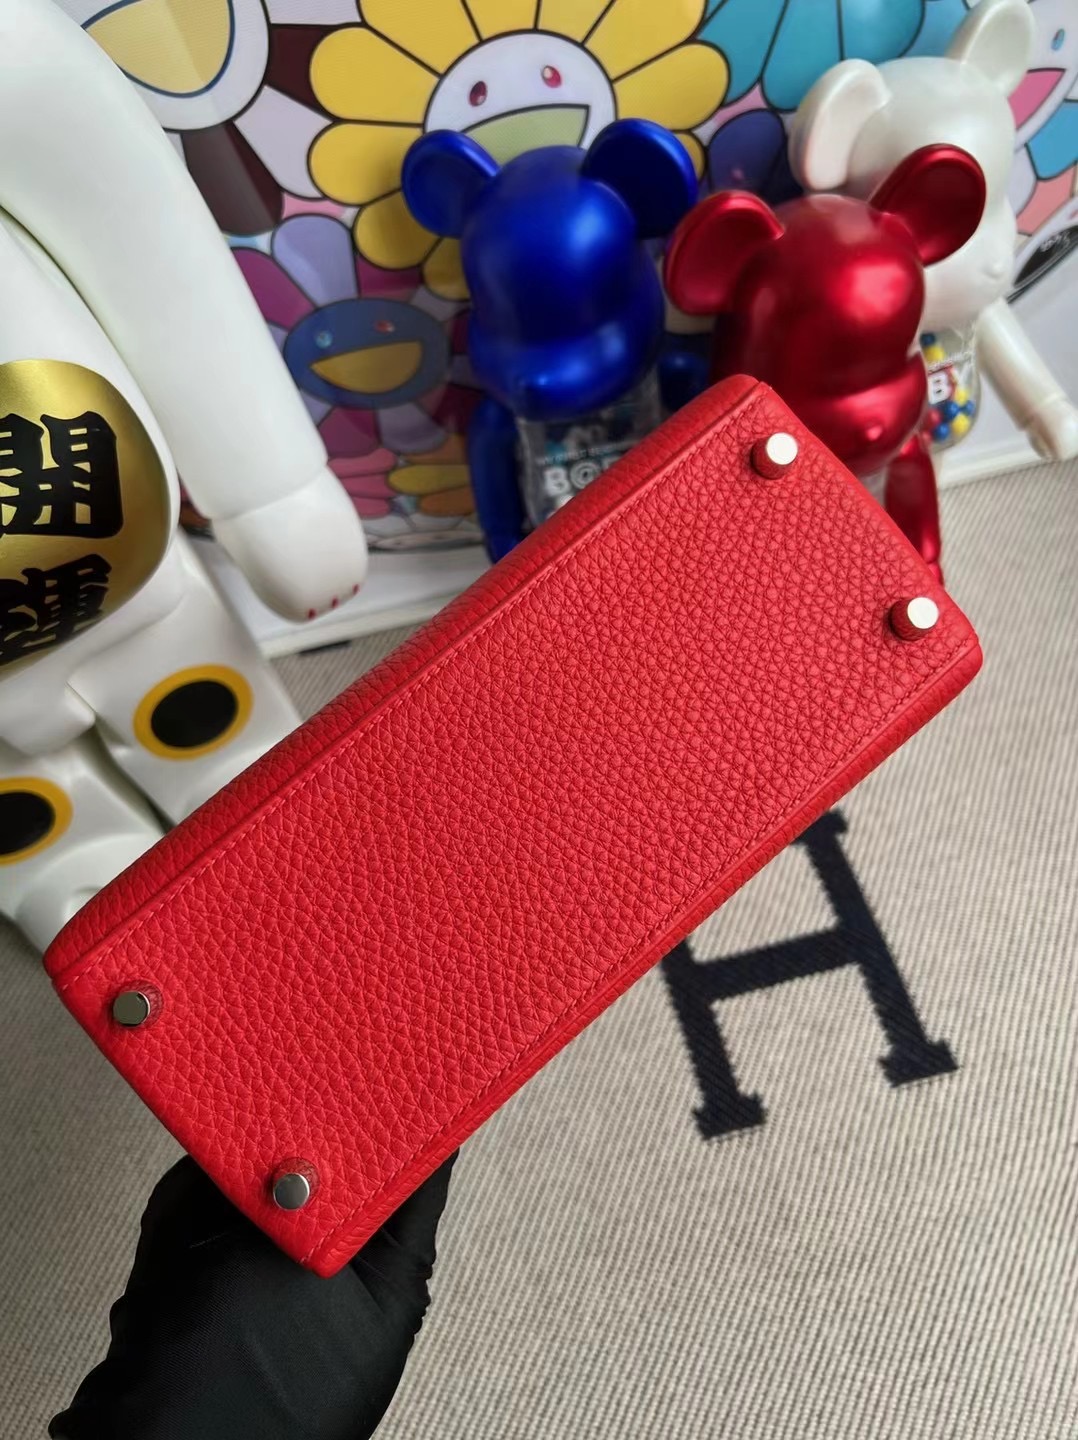 Hermès Kelly 25cm Togo S3 Rose de coeur 心紅色 Palladium Hardware